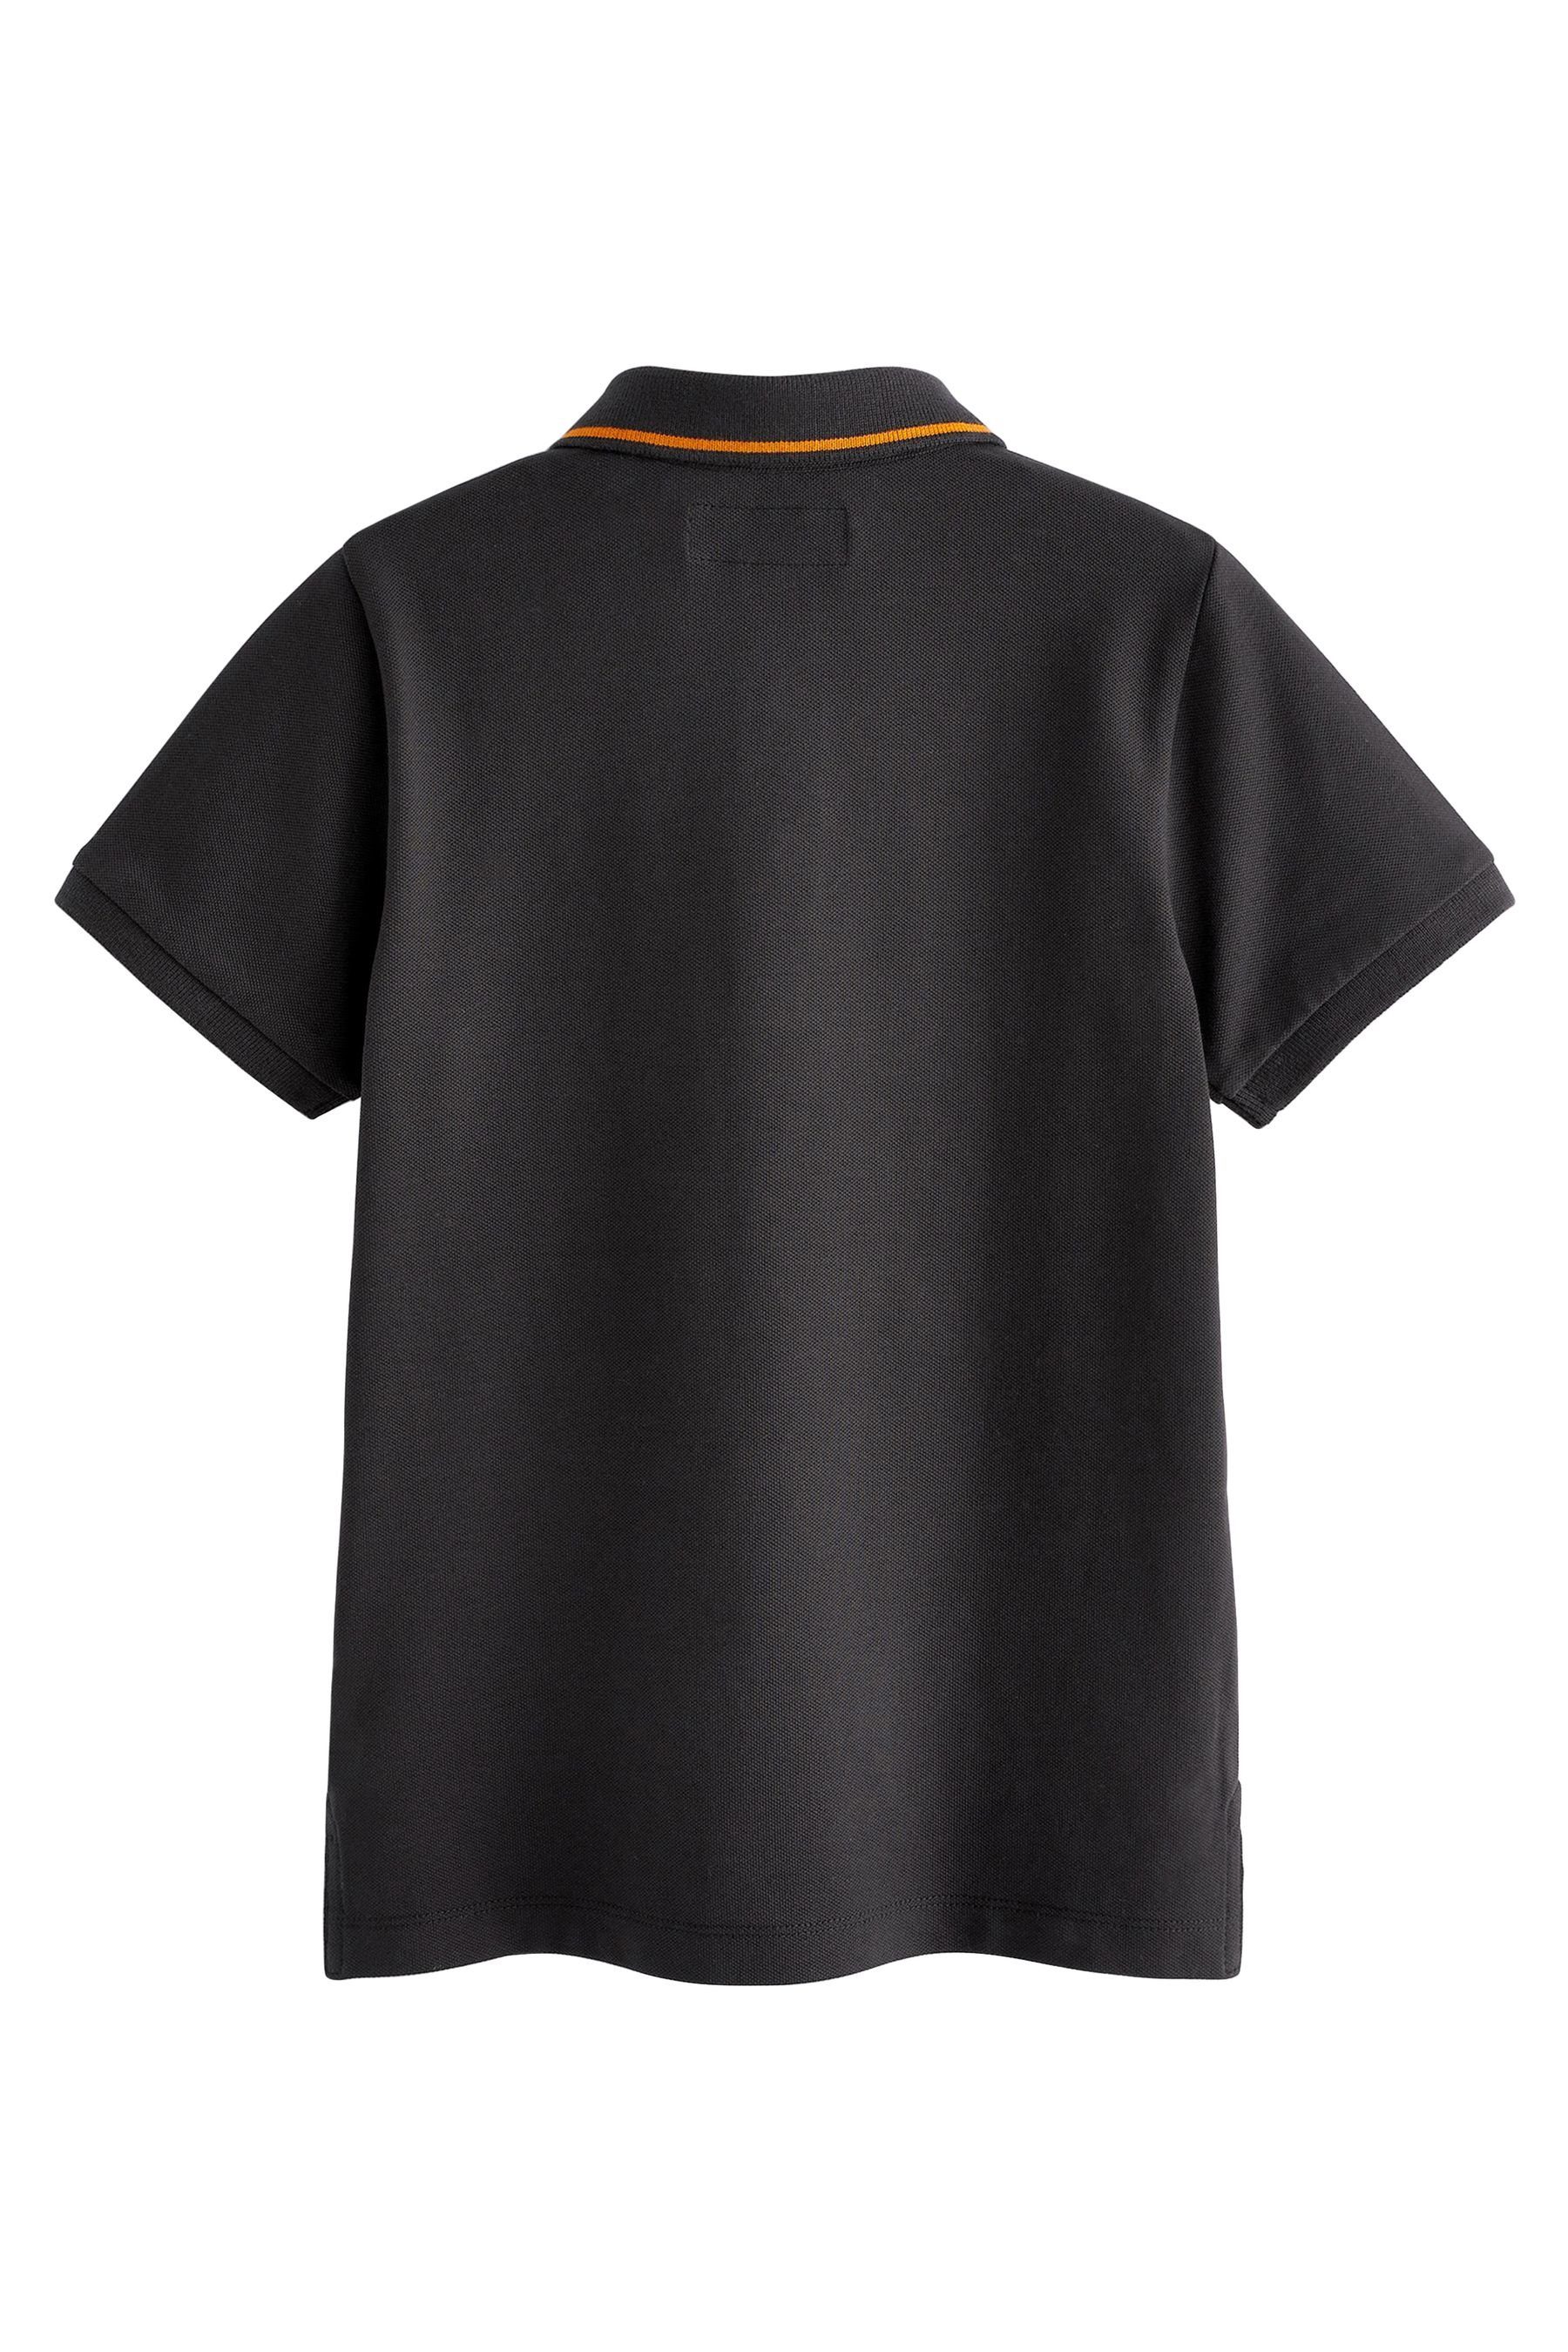 Kurzärmeliges Black/Red (1-tlg) Next Polo-Shirt Poloshirt Blockfarben mit